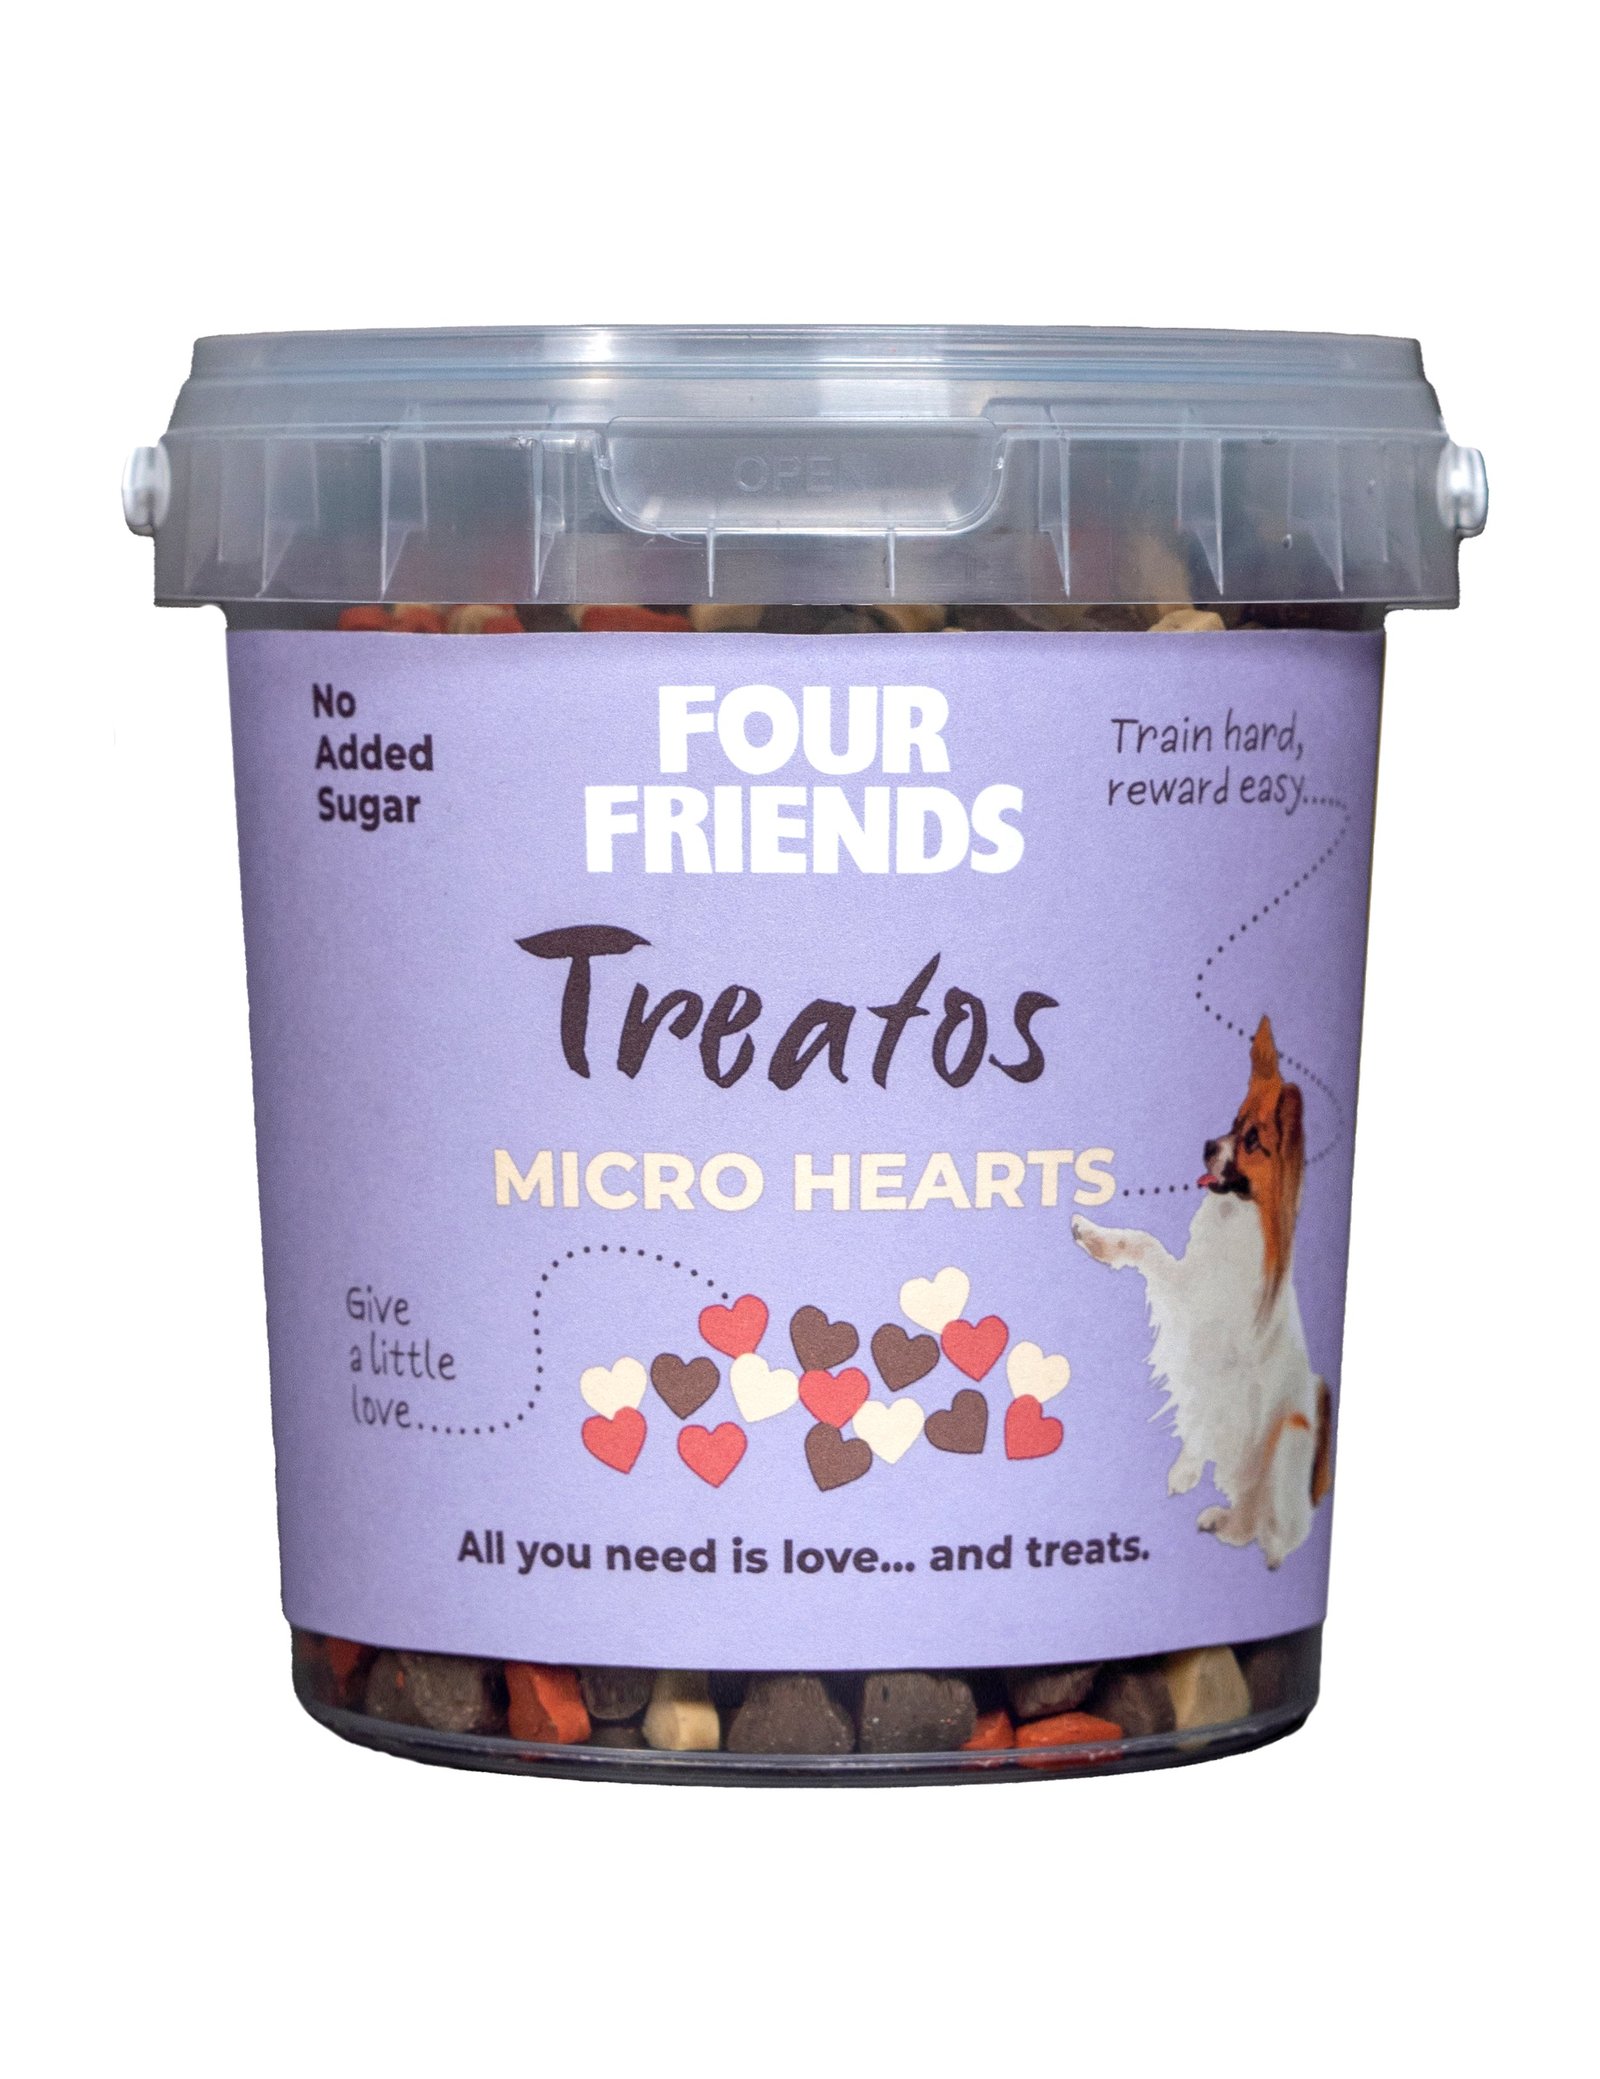 FourFriends Treatos Micro Hearts 500 g